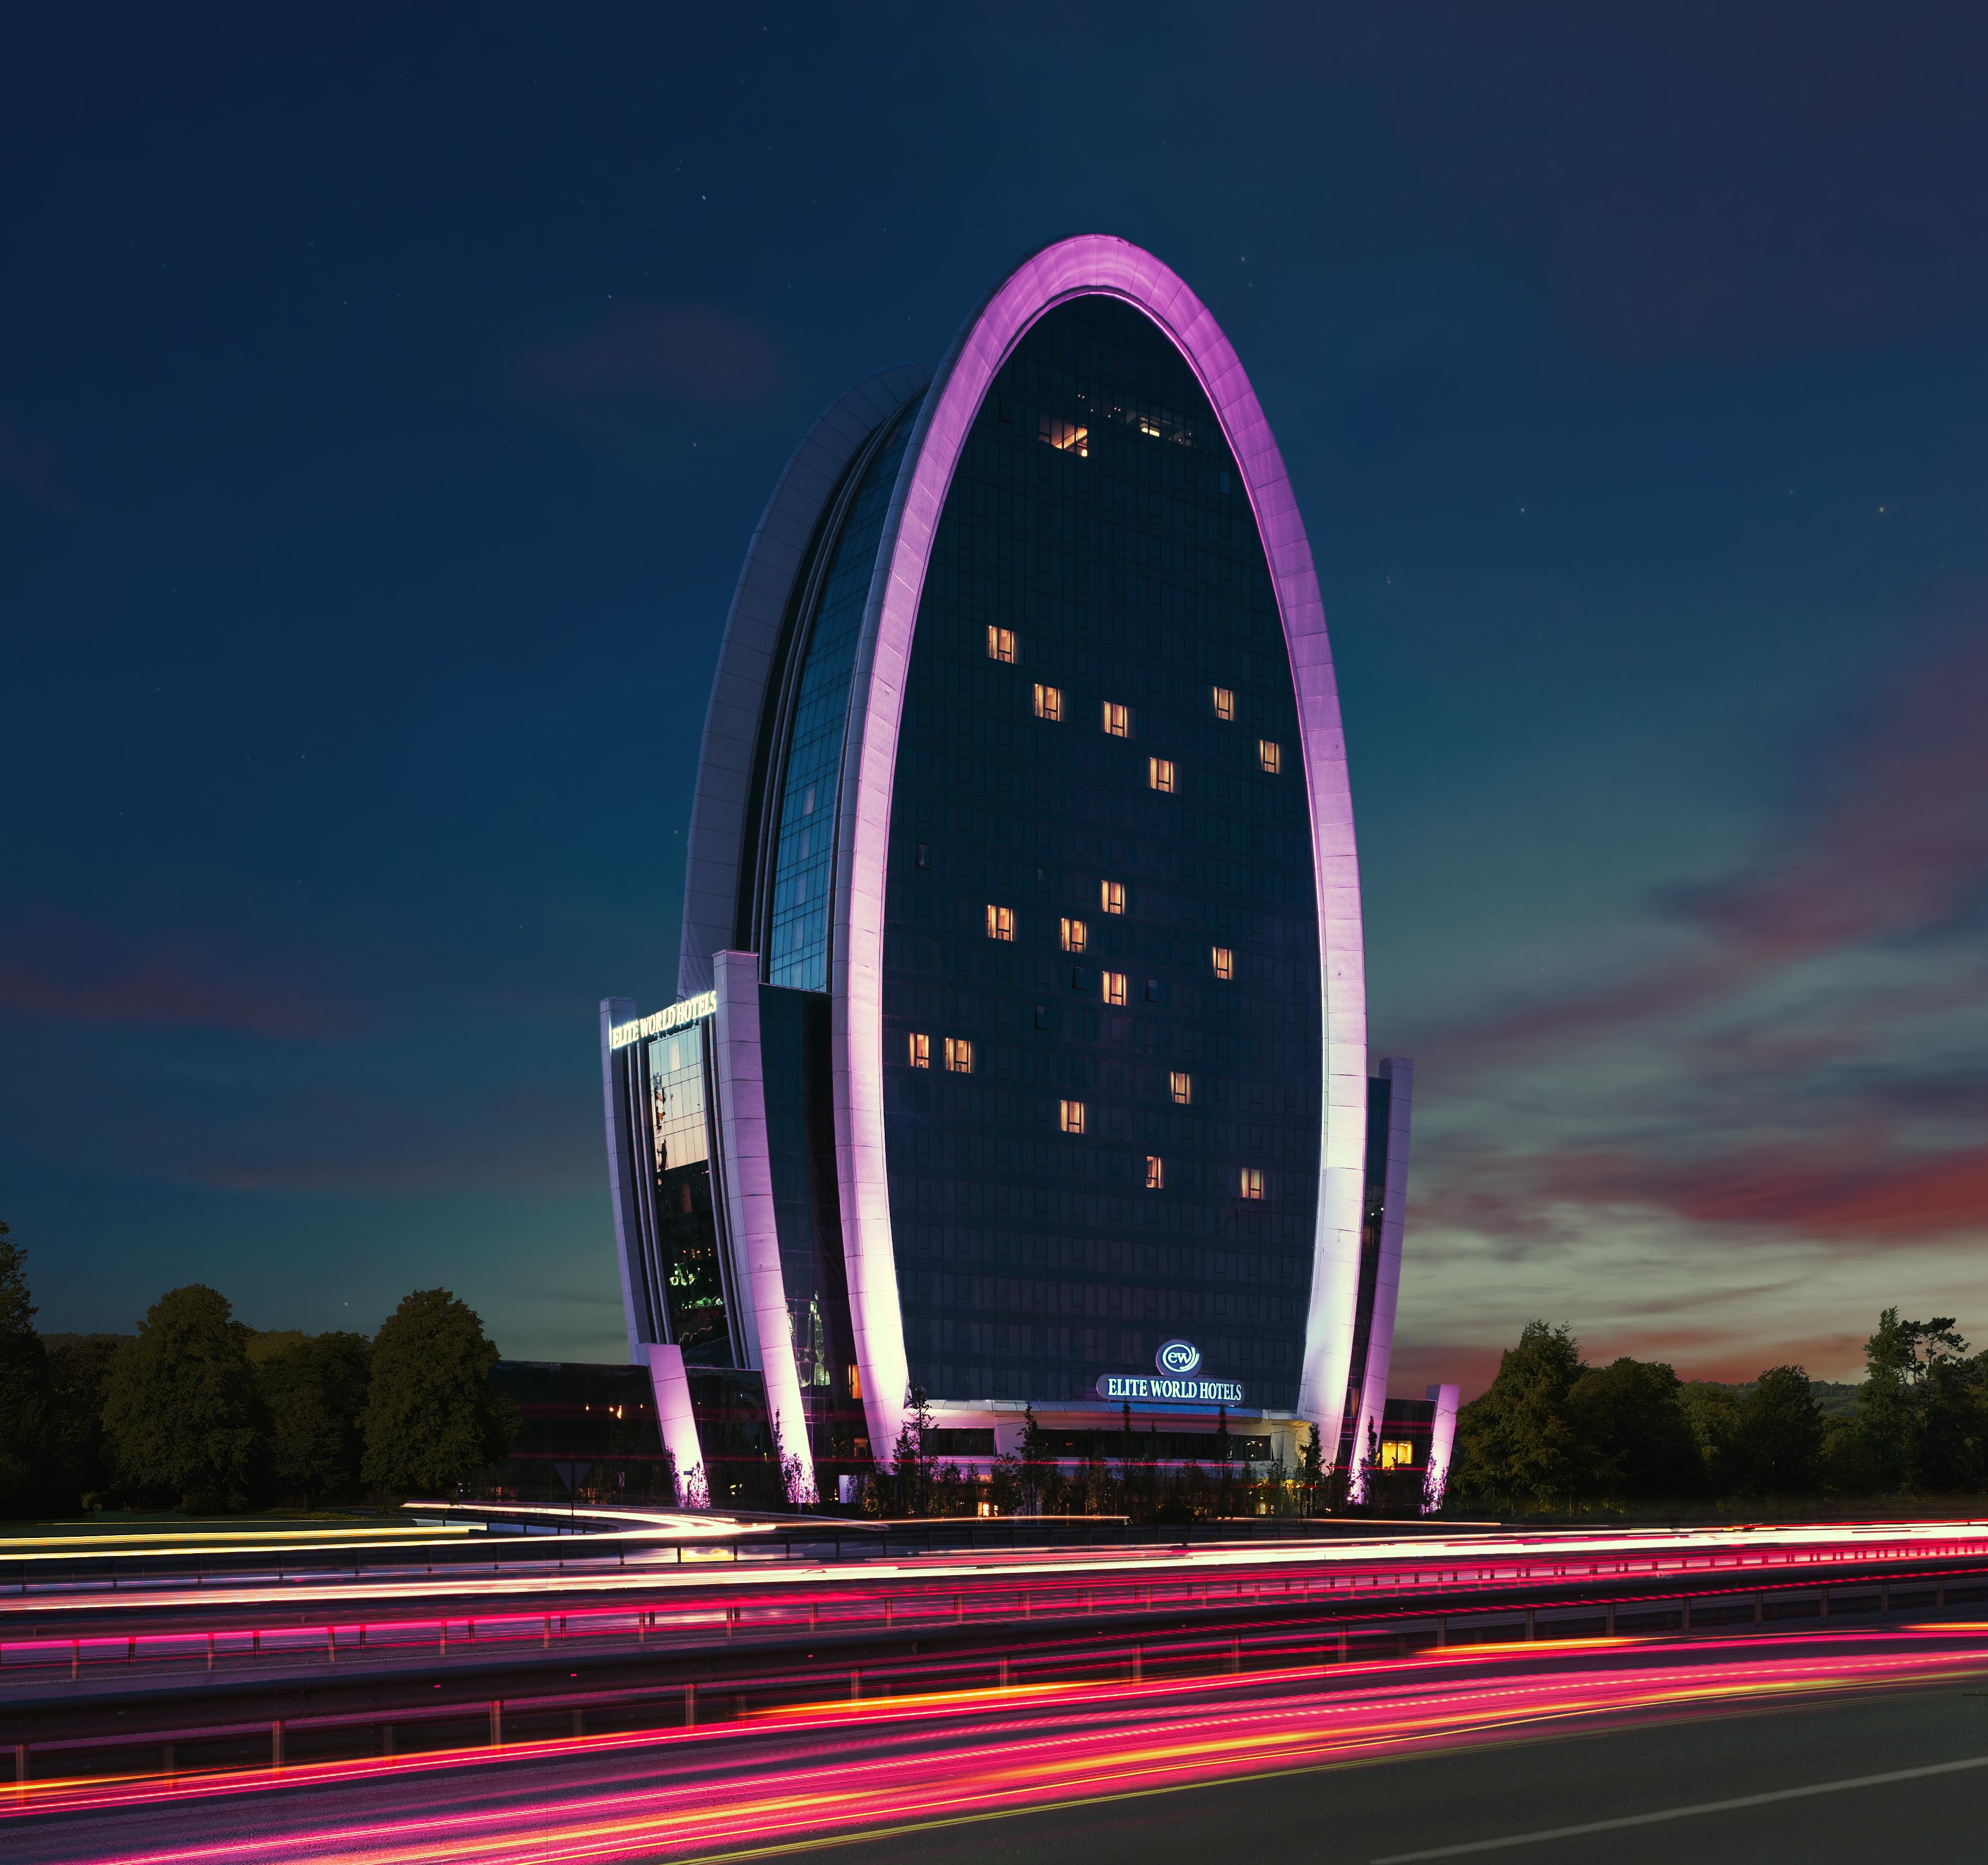 Elite World Grand Istanbul Basın Ekspres Hotel Exterior foto